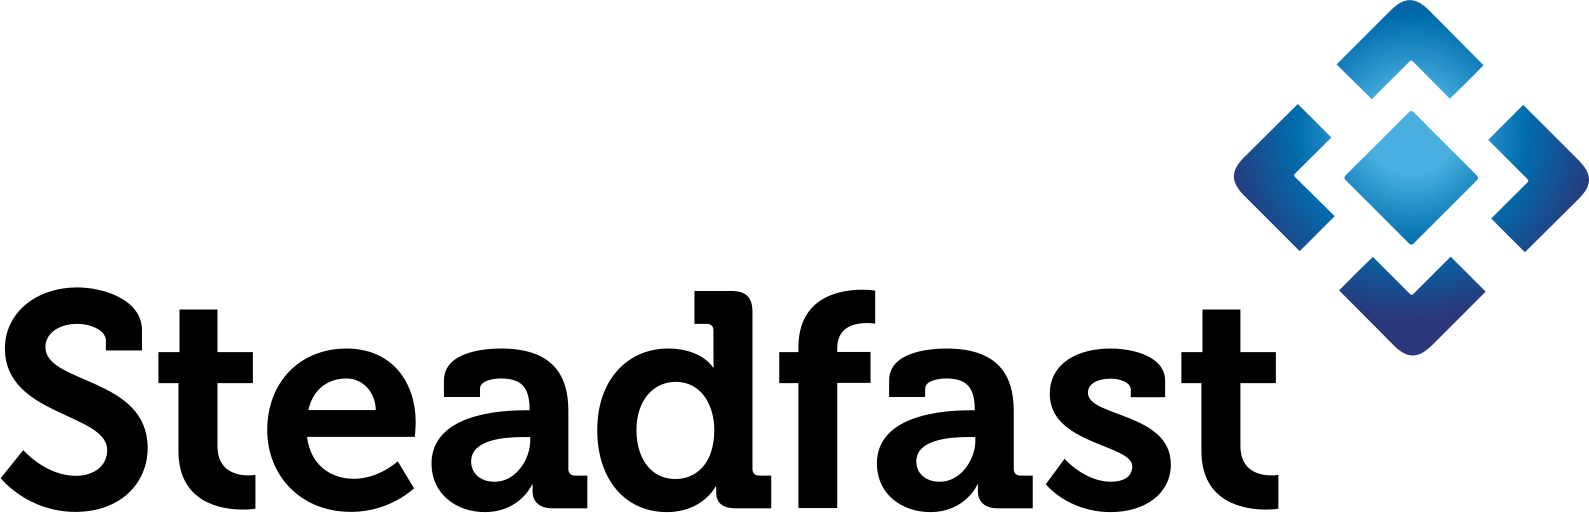 Steadfast Group  logo large (transparent PNG)